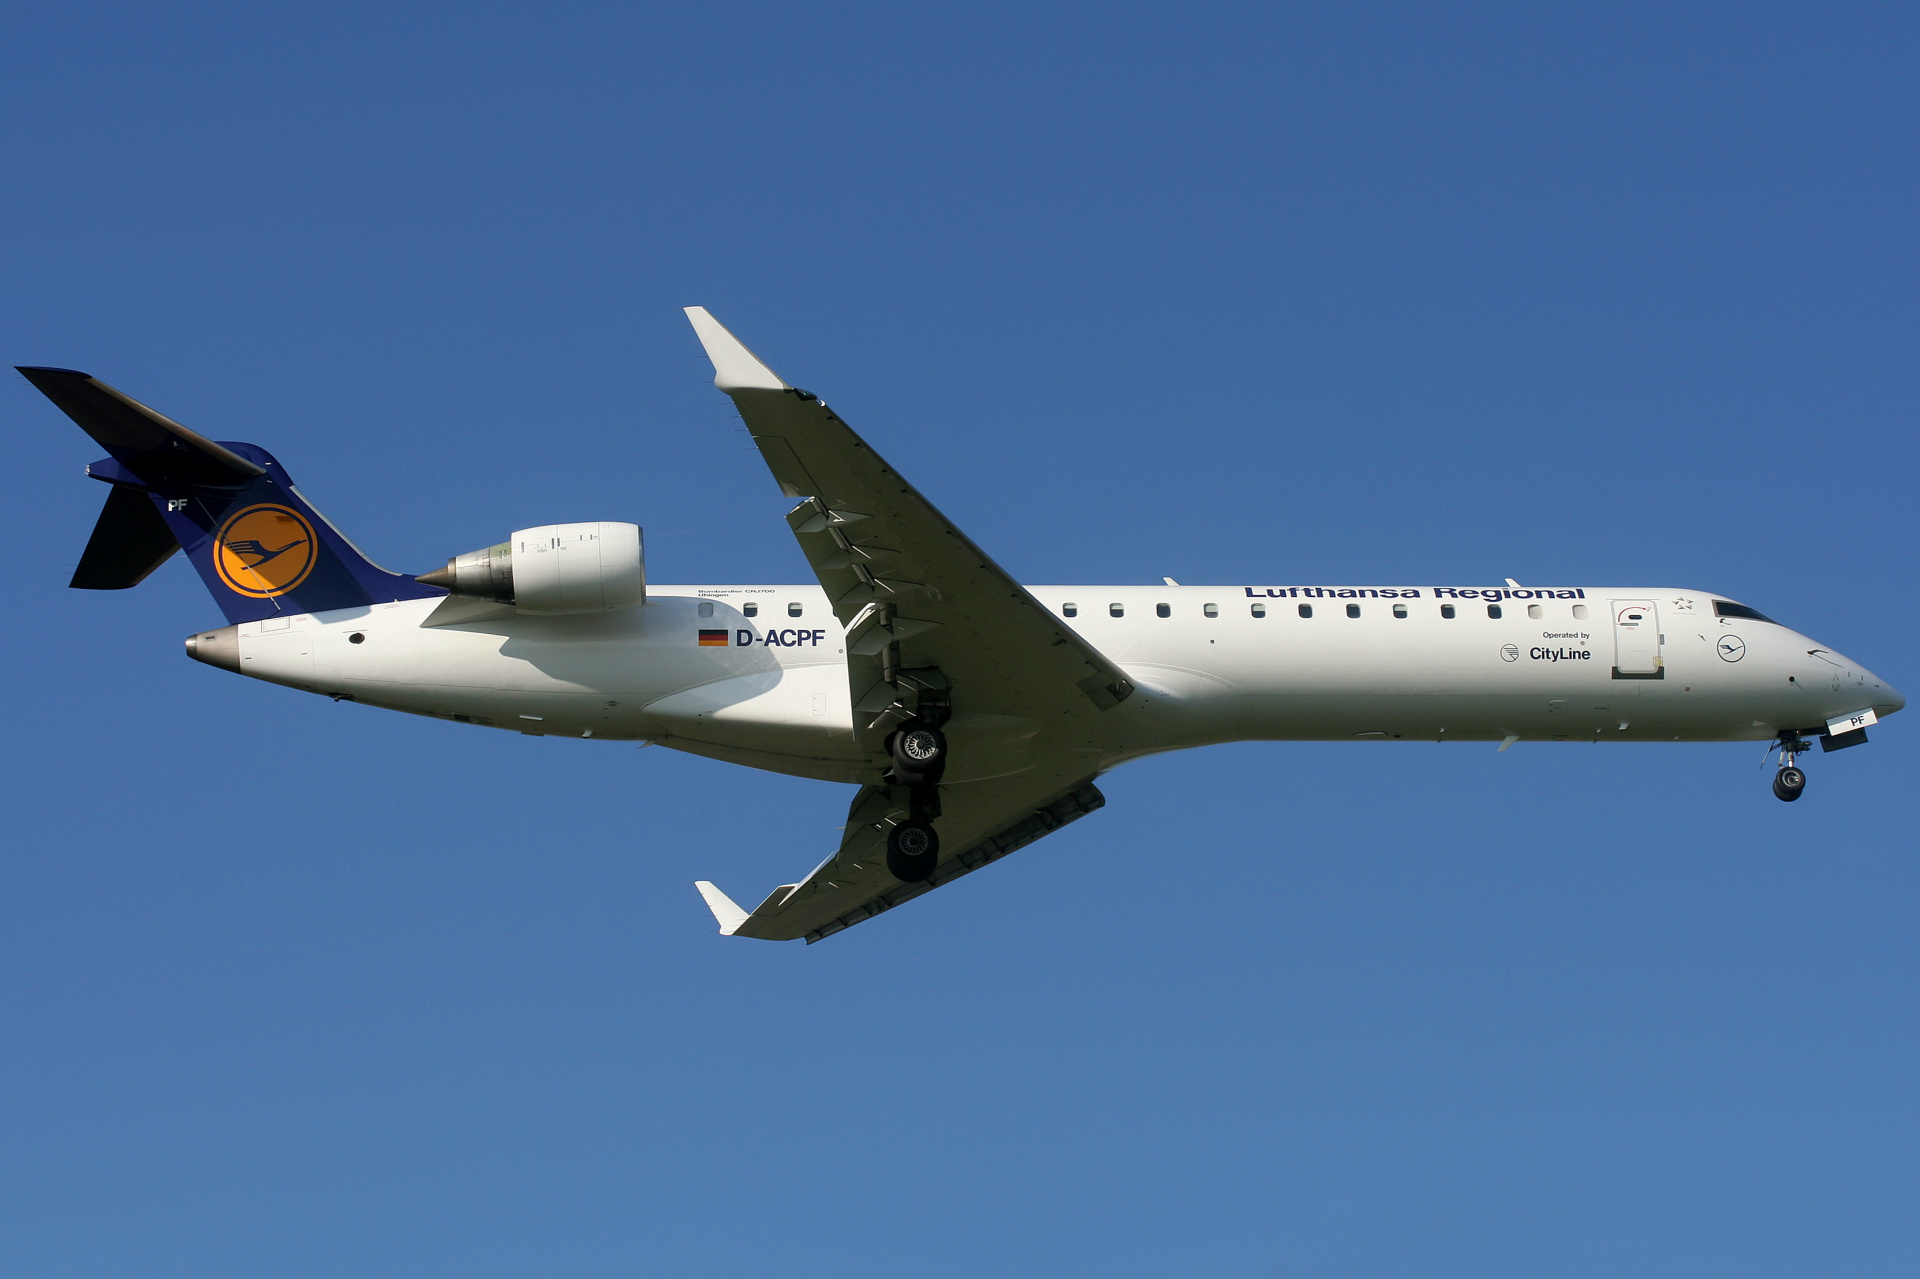 D-ACPF, Lufthansa Regional (CityLine) (Aircraft » EPWA Spotting » Mitsubishi Regional Jet » CRJ-700)